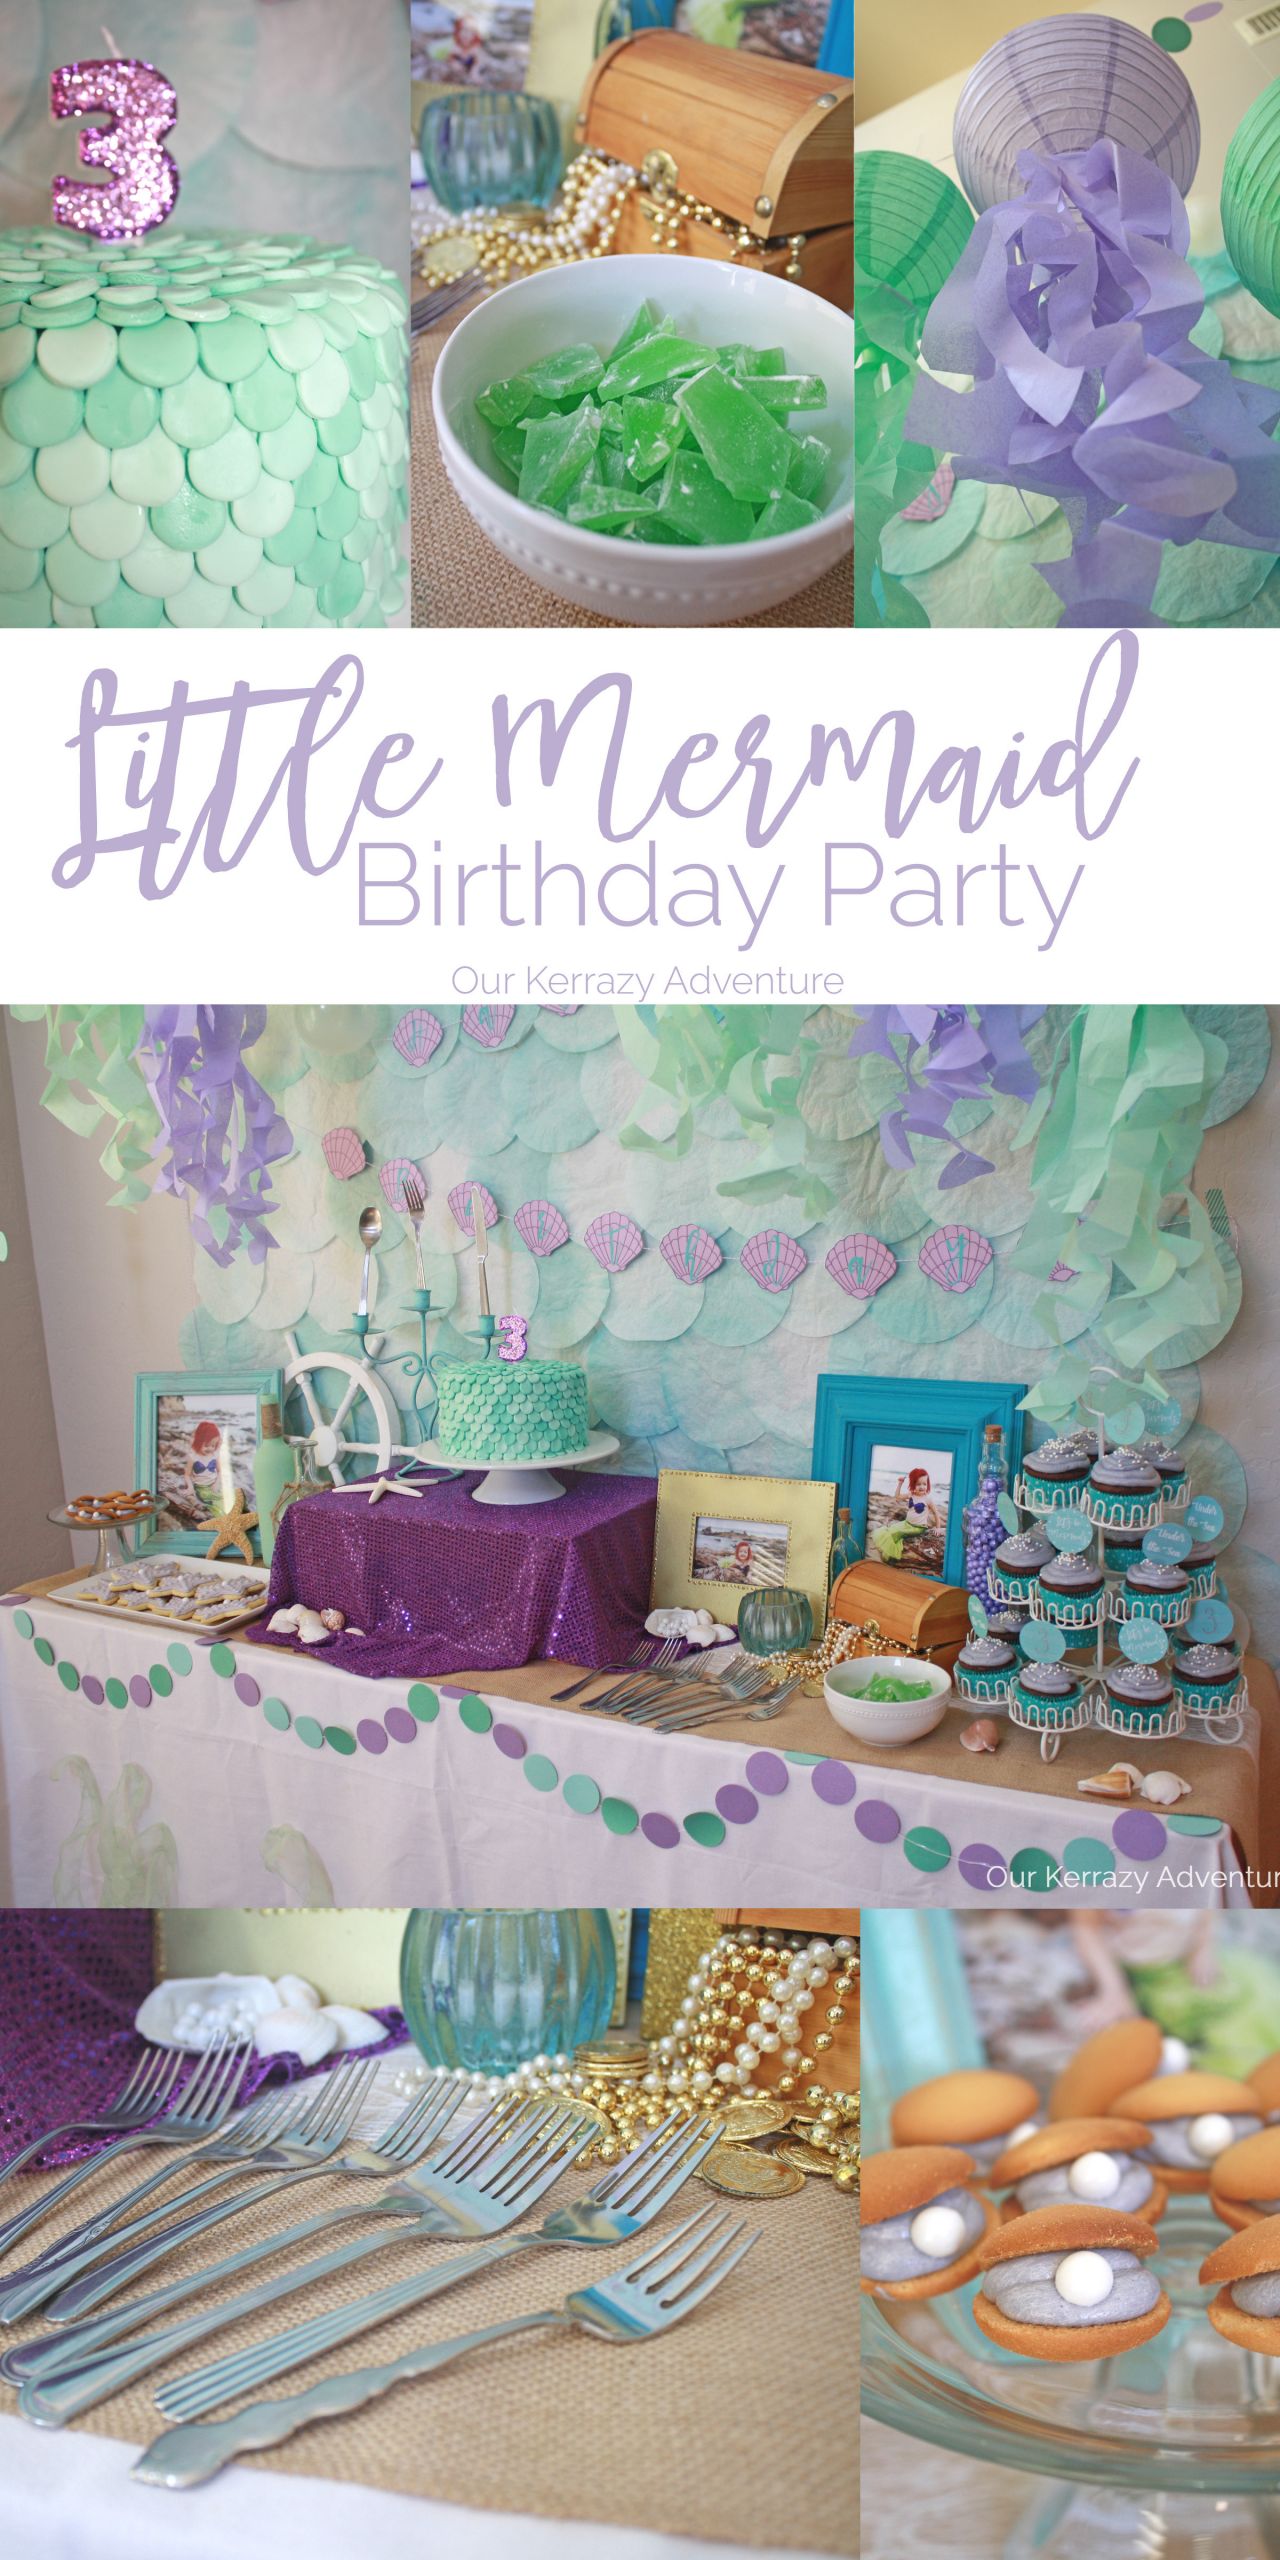 Mermaid Birthday Party Ideas
 Mermaid Party Ideas Our Kerrazy Adventure